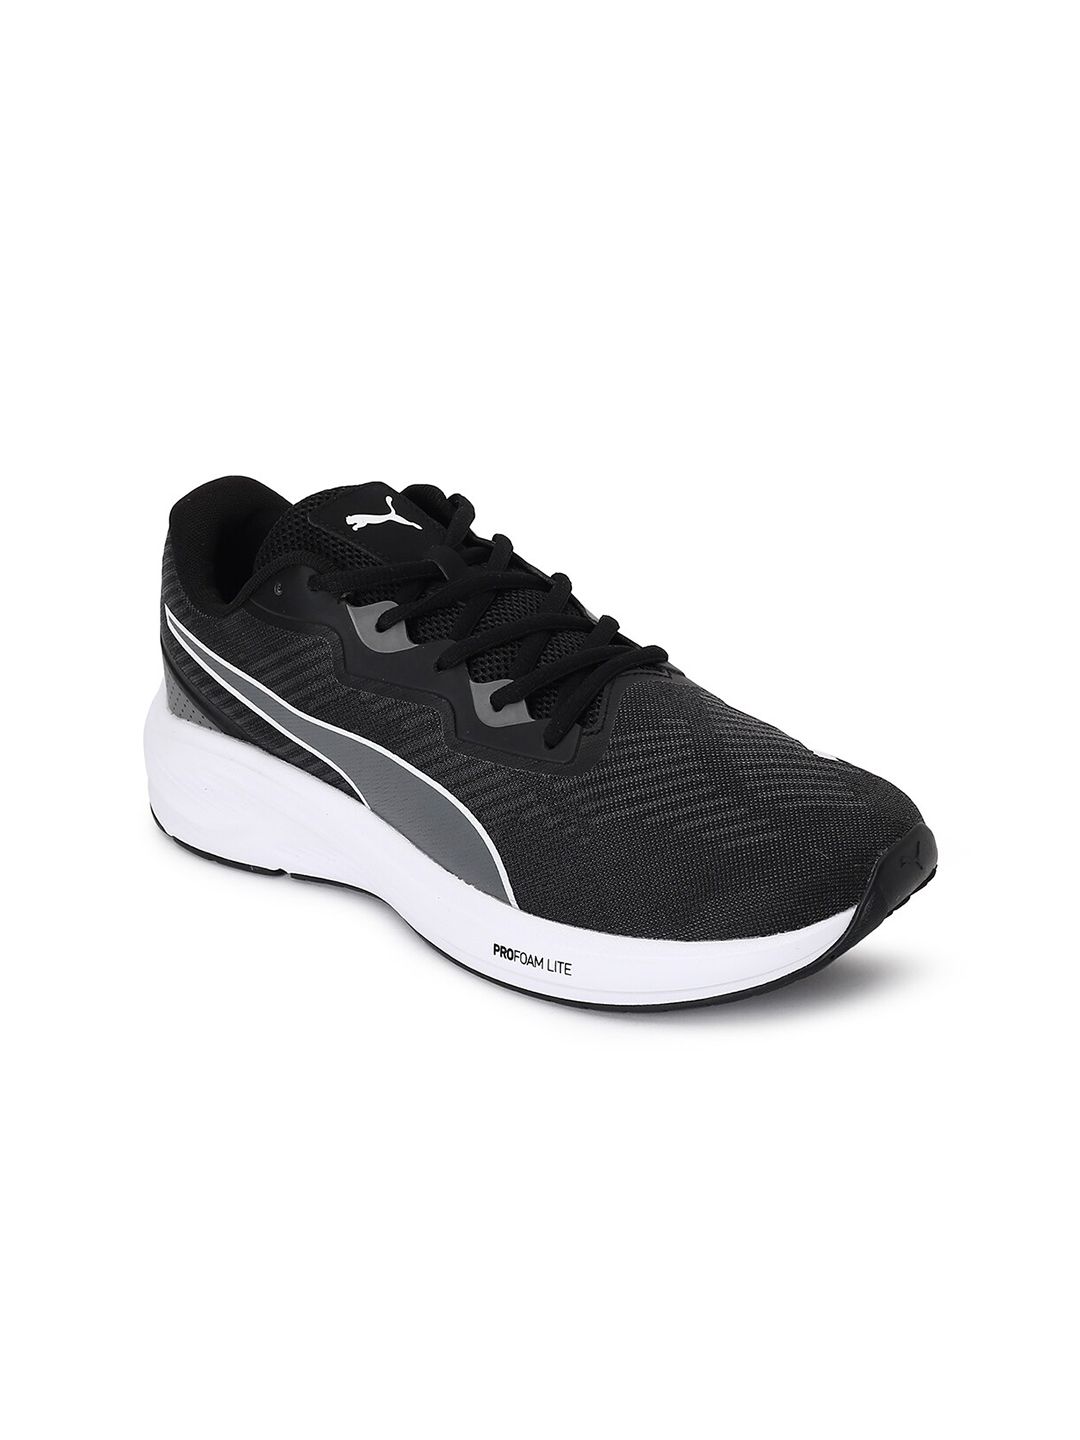 Puma Unisex Black Sports Shoes 37661501 Price in India